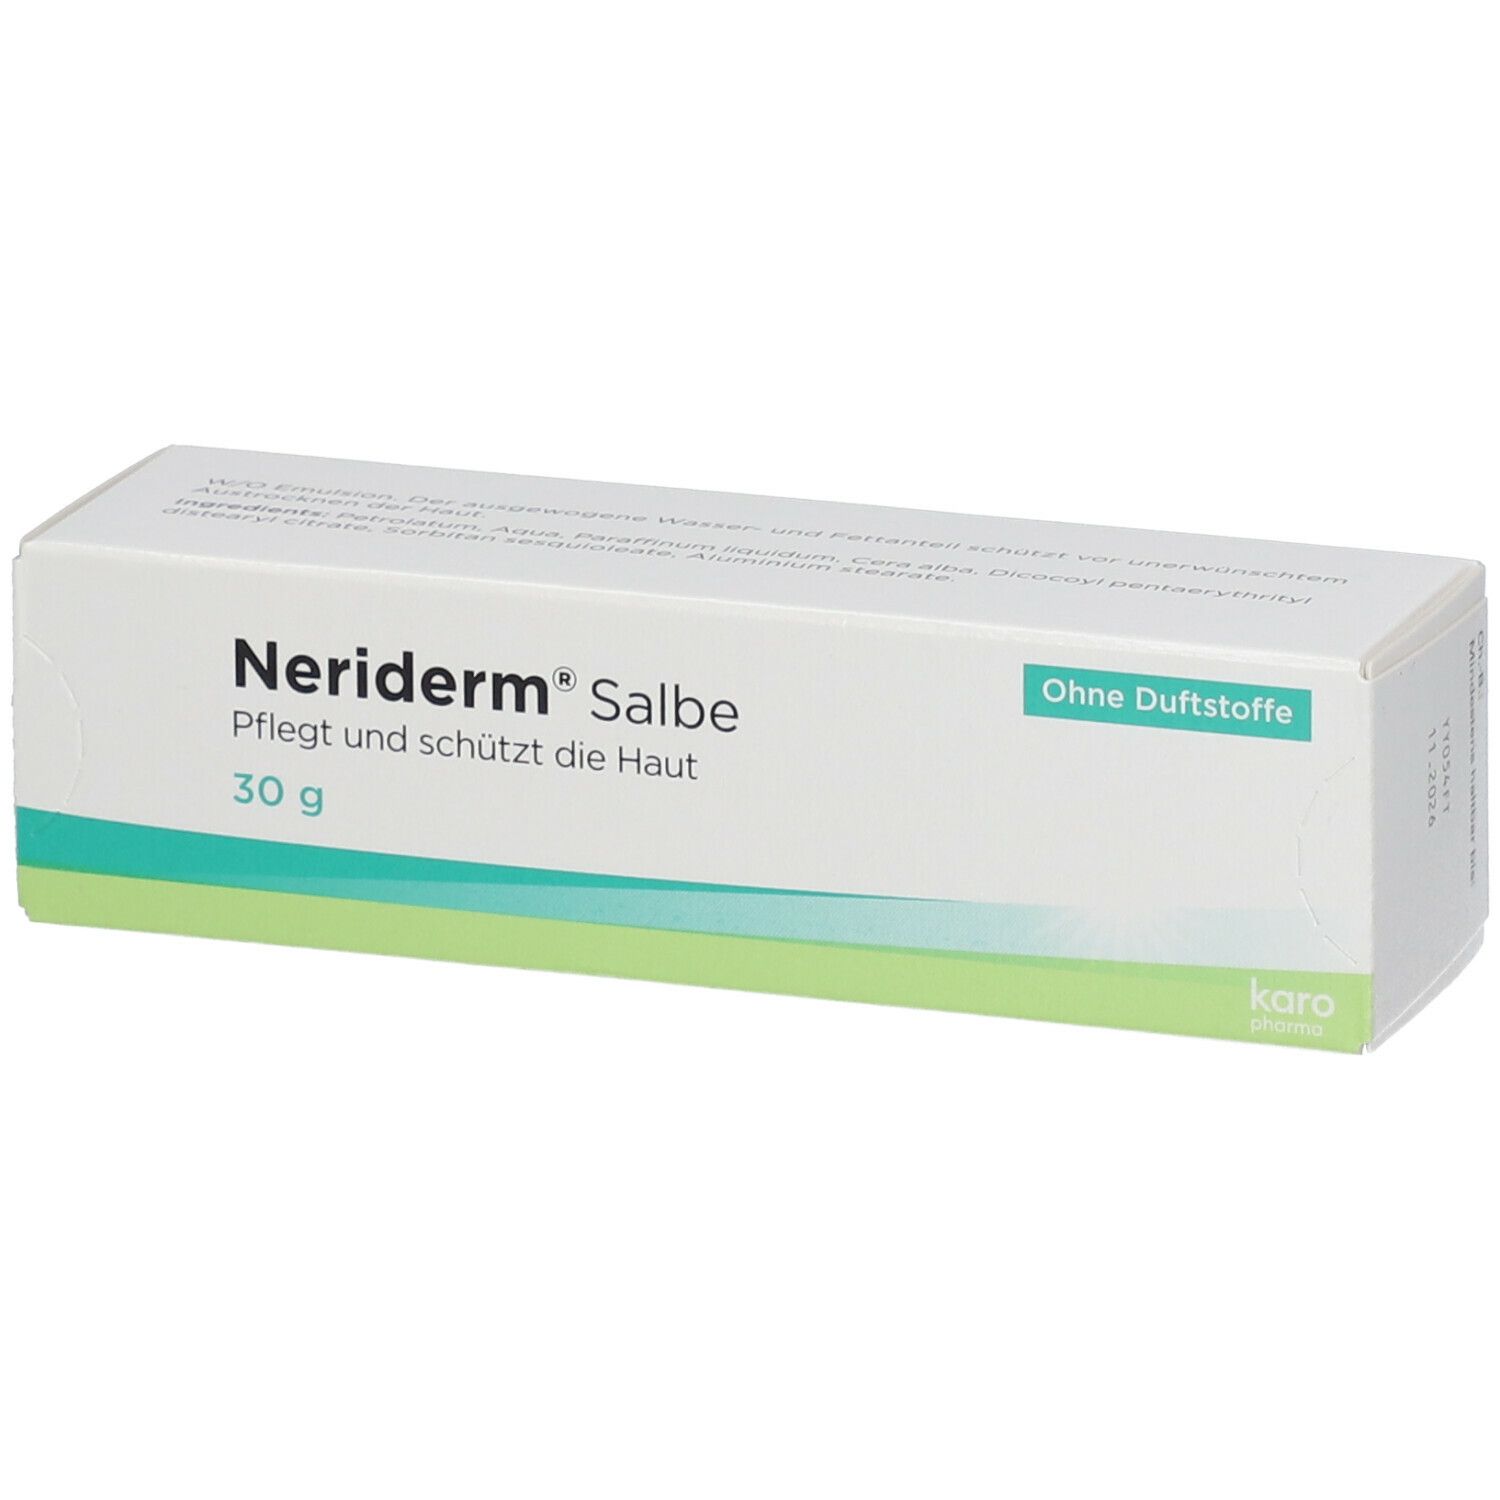 Image of Neriderm® Salbe